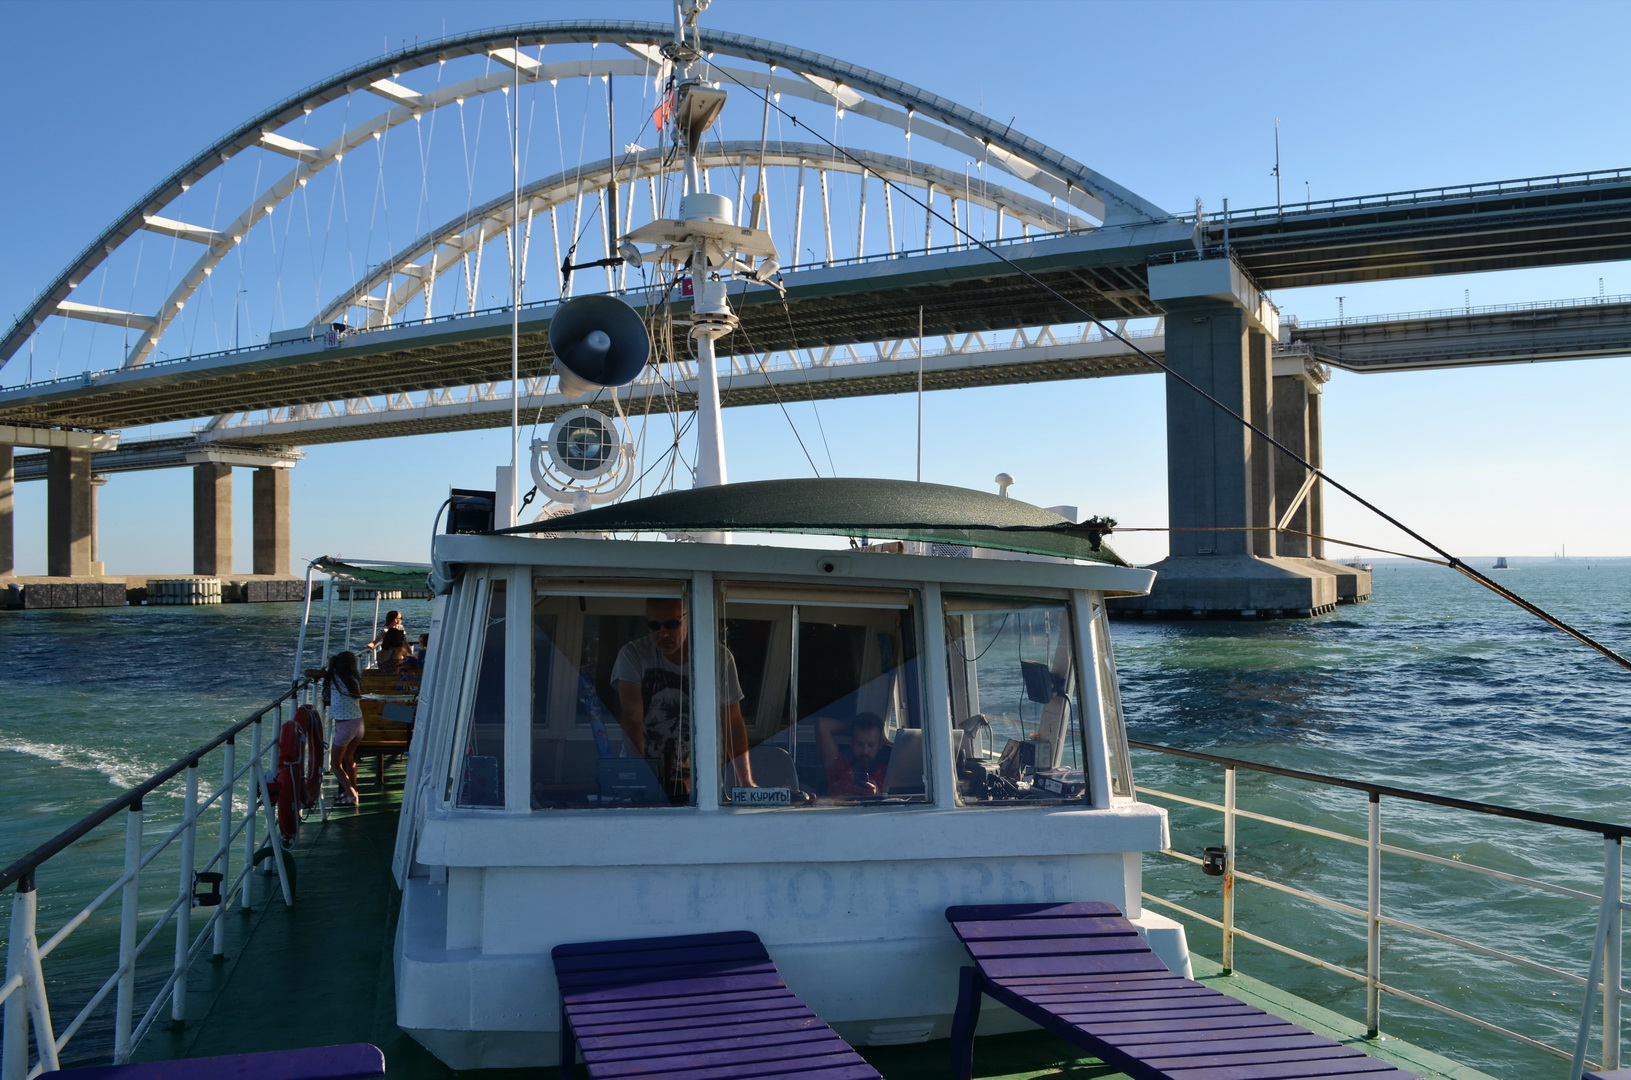 kerch boat trip to the Crimean bridge